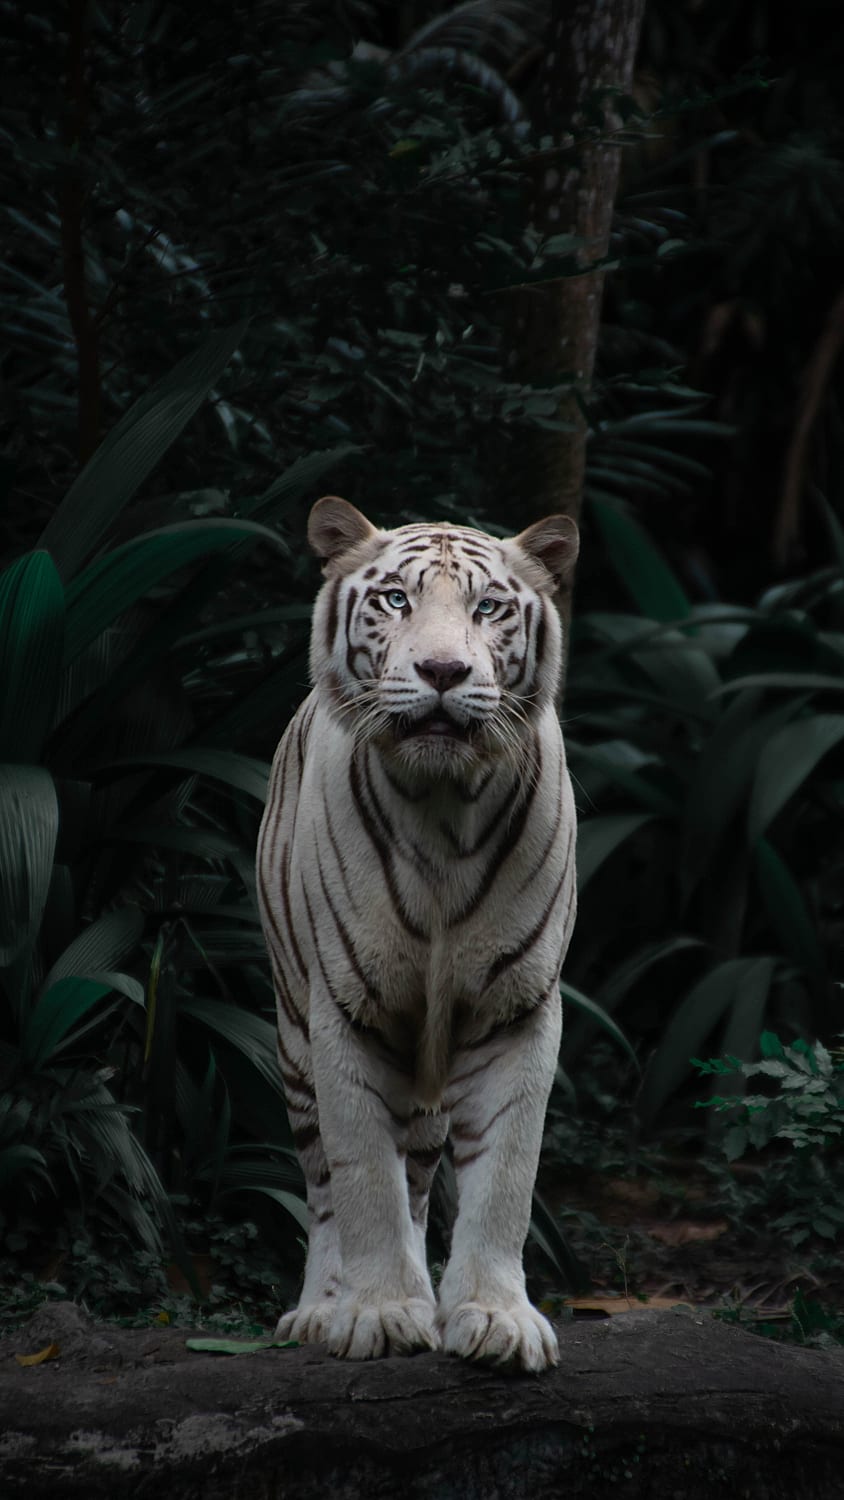 This breathtaking white tiger